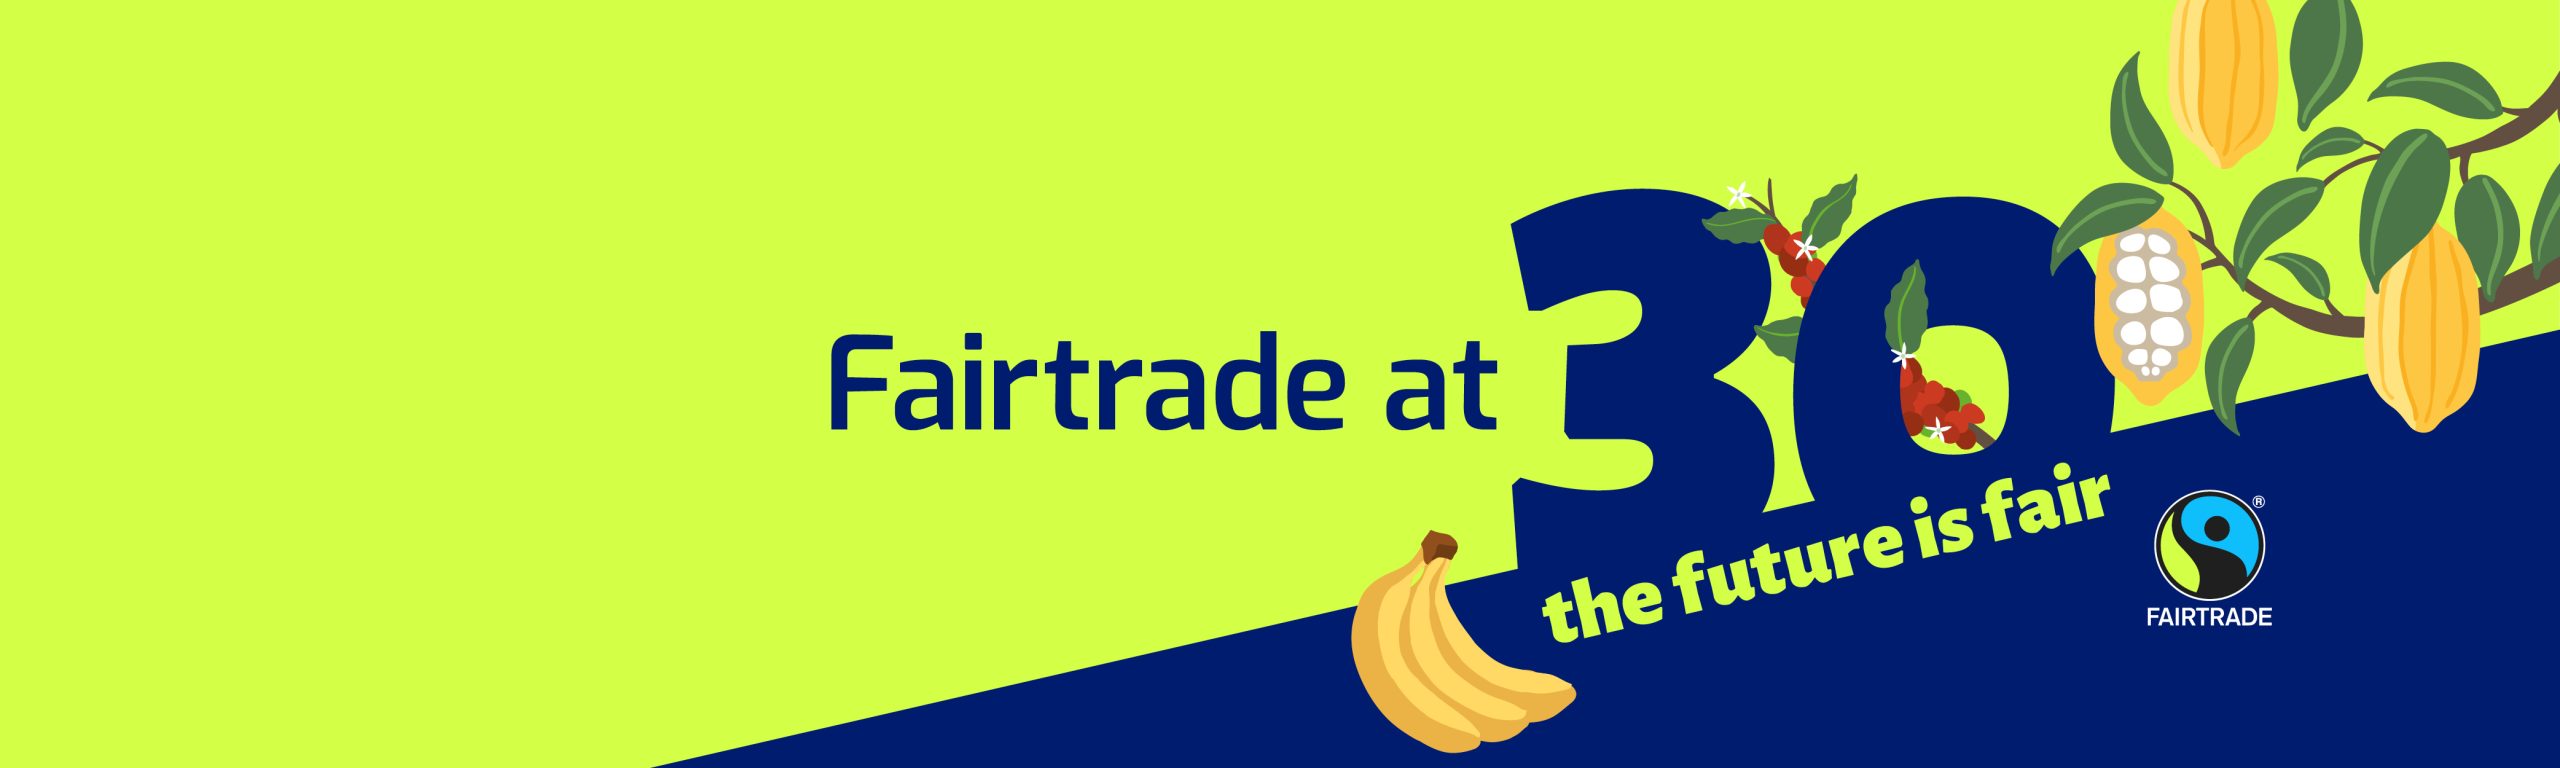 Fairtrade's 30th anniversary banner